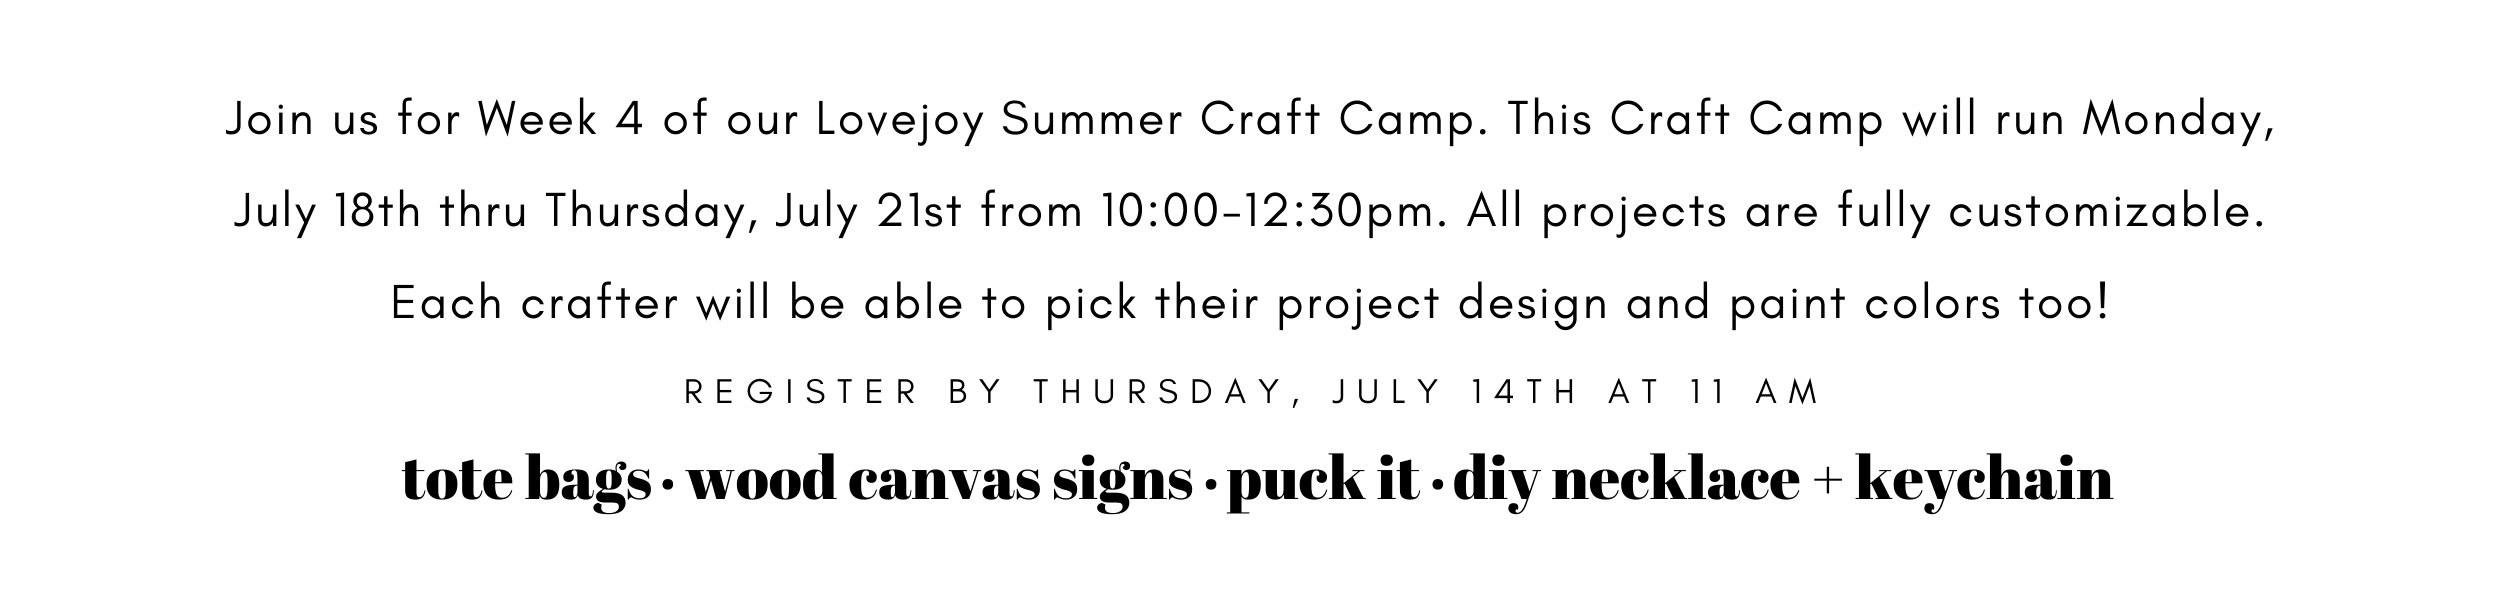 Summer Craft Camp Week 4 | Lovejoy Workshop | Hillsboro, Oregon | www.lovejoyworkshop.com